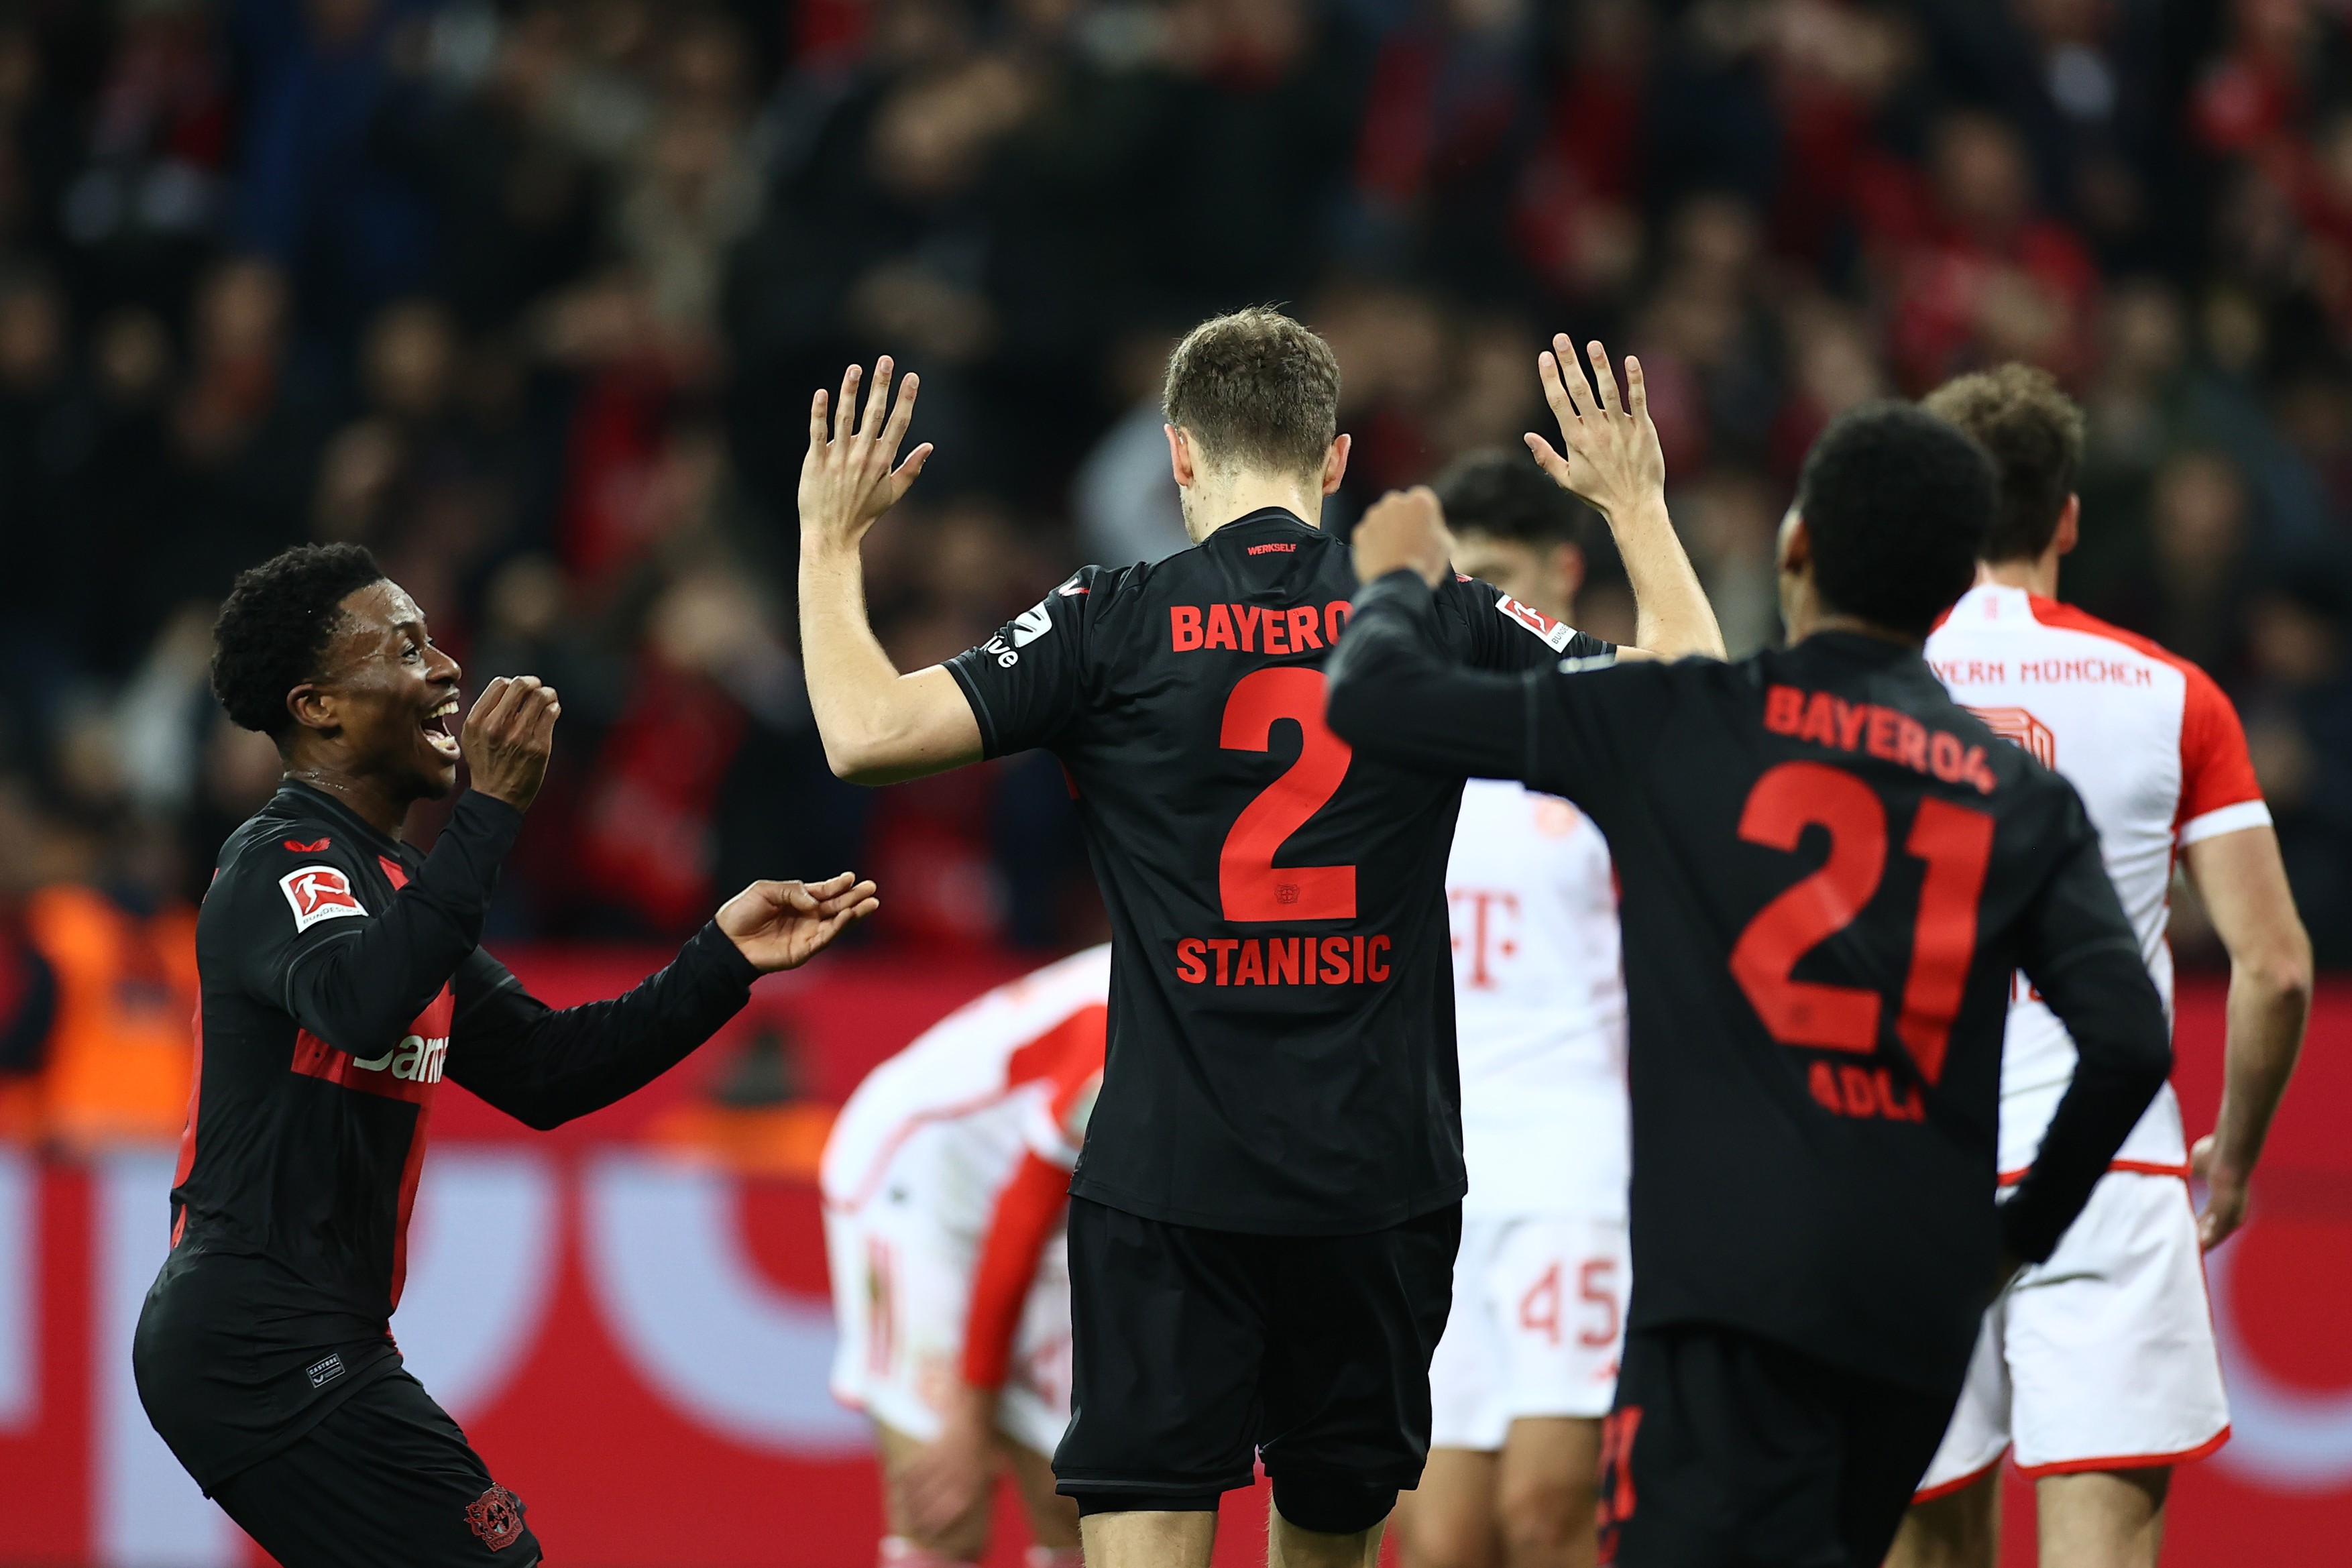 Bayer Leverkusen - Bayern Munchen 2-0, ACUM, în direct la Digi Sport 3. Trupa lui Xabi Alonso și-a dublat avantajul